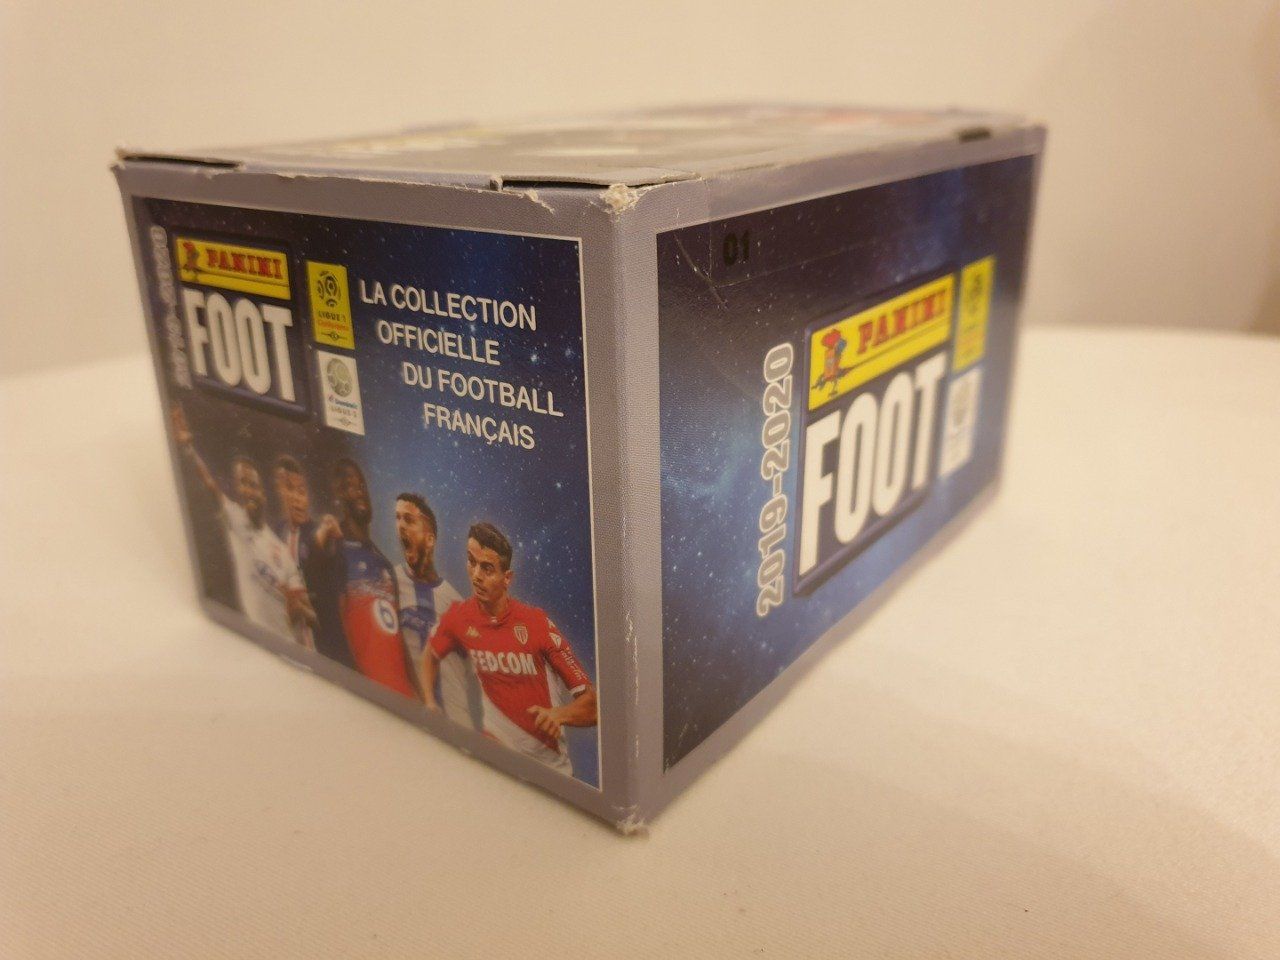 Panini Foot 2019-2020 championnat de France Box 100 pochettes